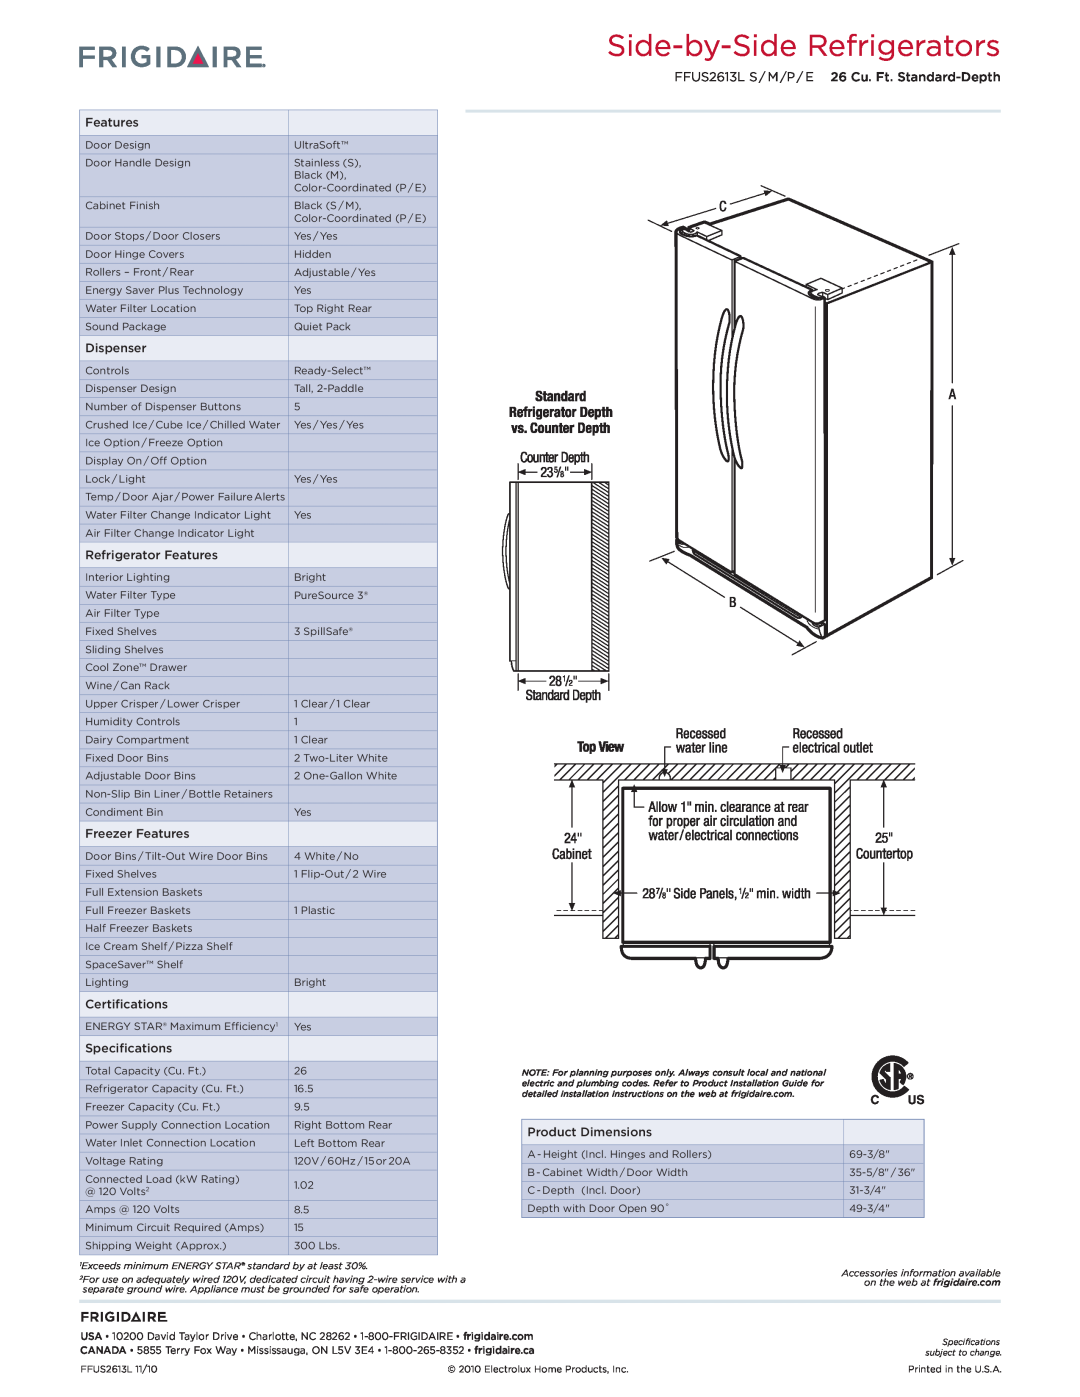 Frigidaire FFUS2613LS dimensions Side-by-SideRefrigerators, FFUS2613L S / M /P / E 26 Cu. Ft. Standard-Depth 